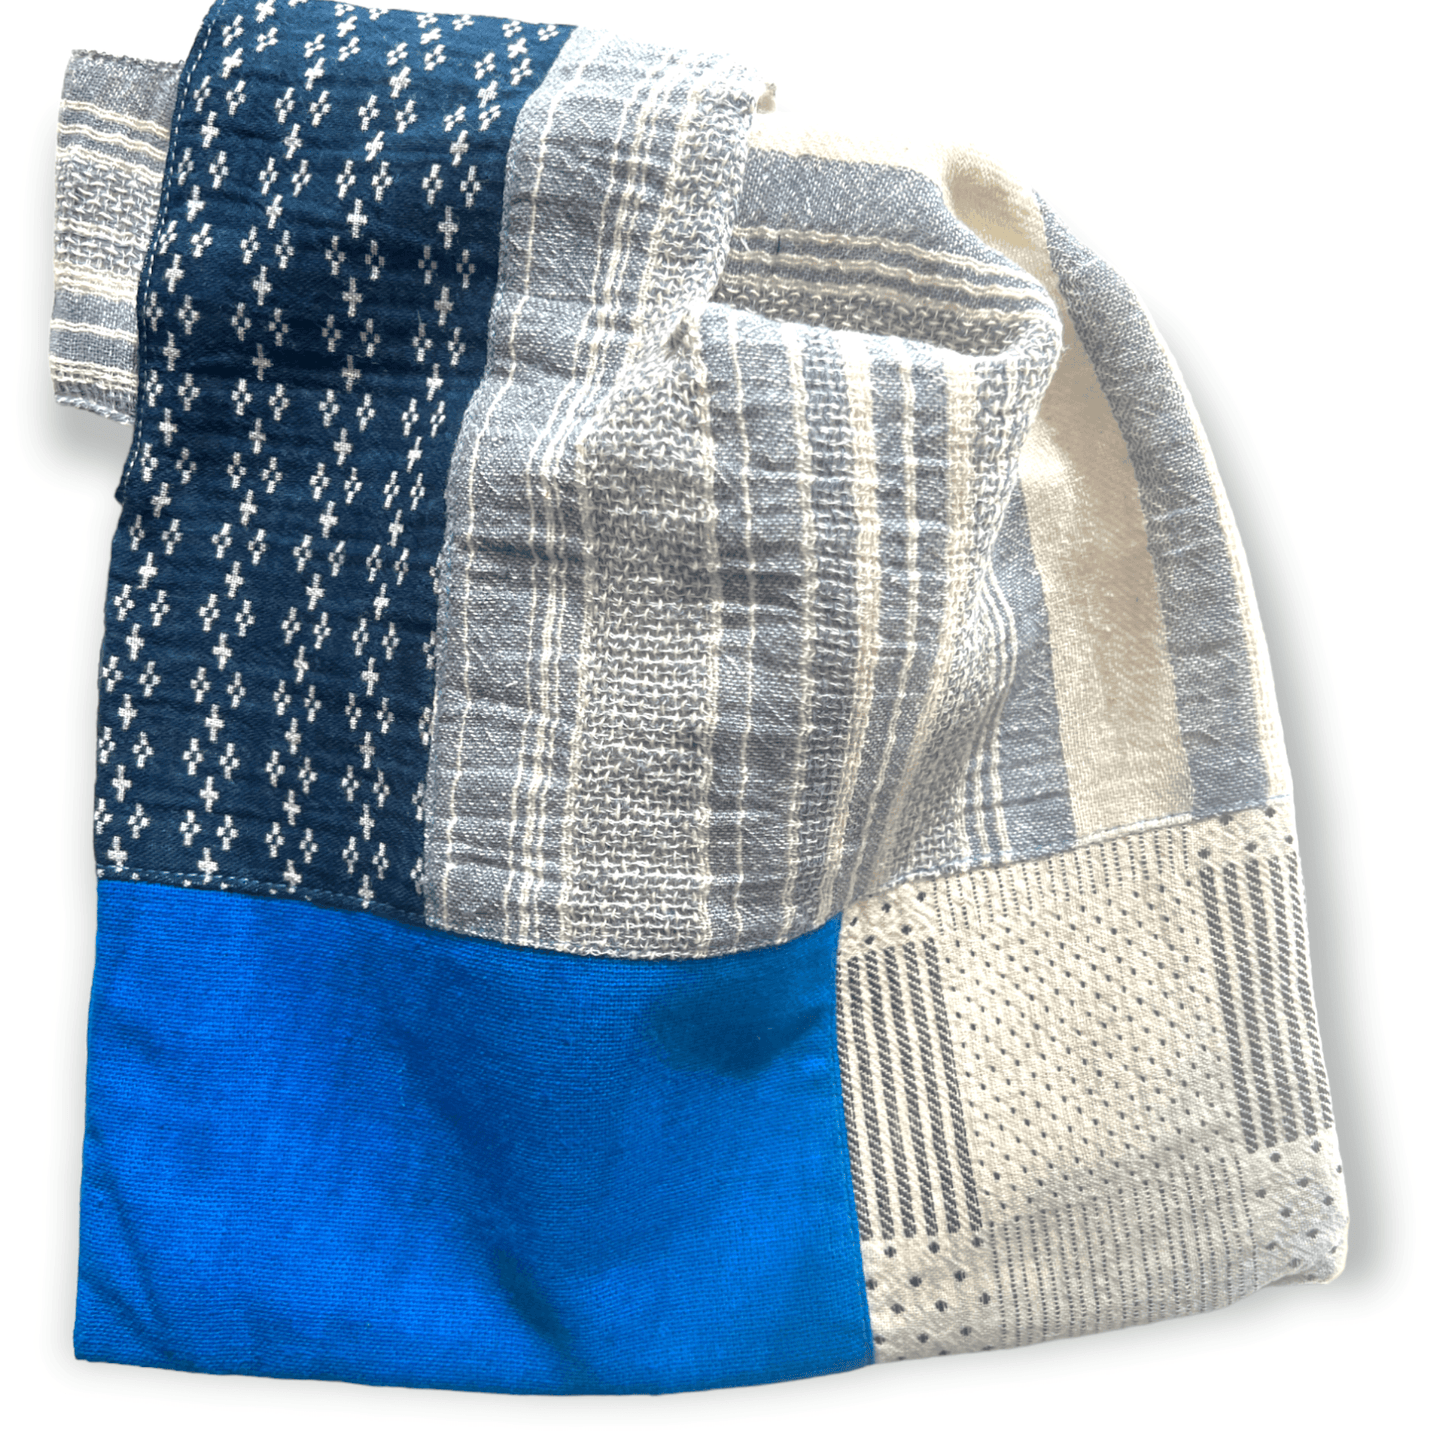 Shades of blue hand dyed hand crafted fabric bag - Sundara Joon